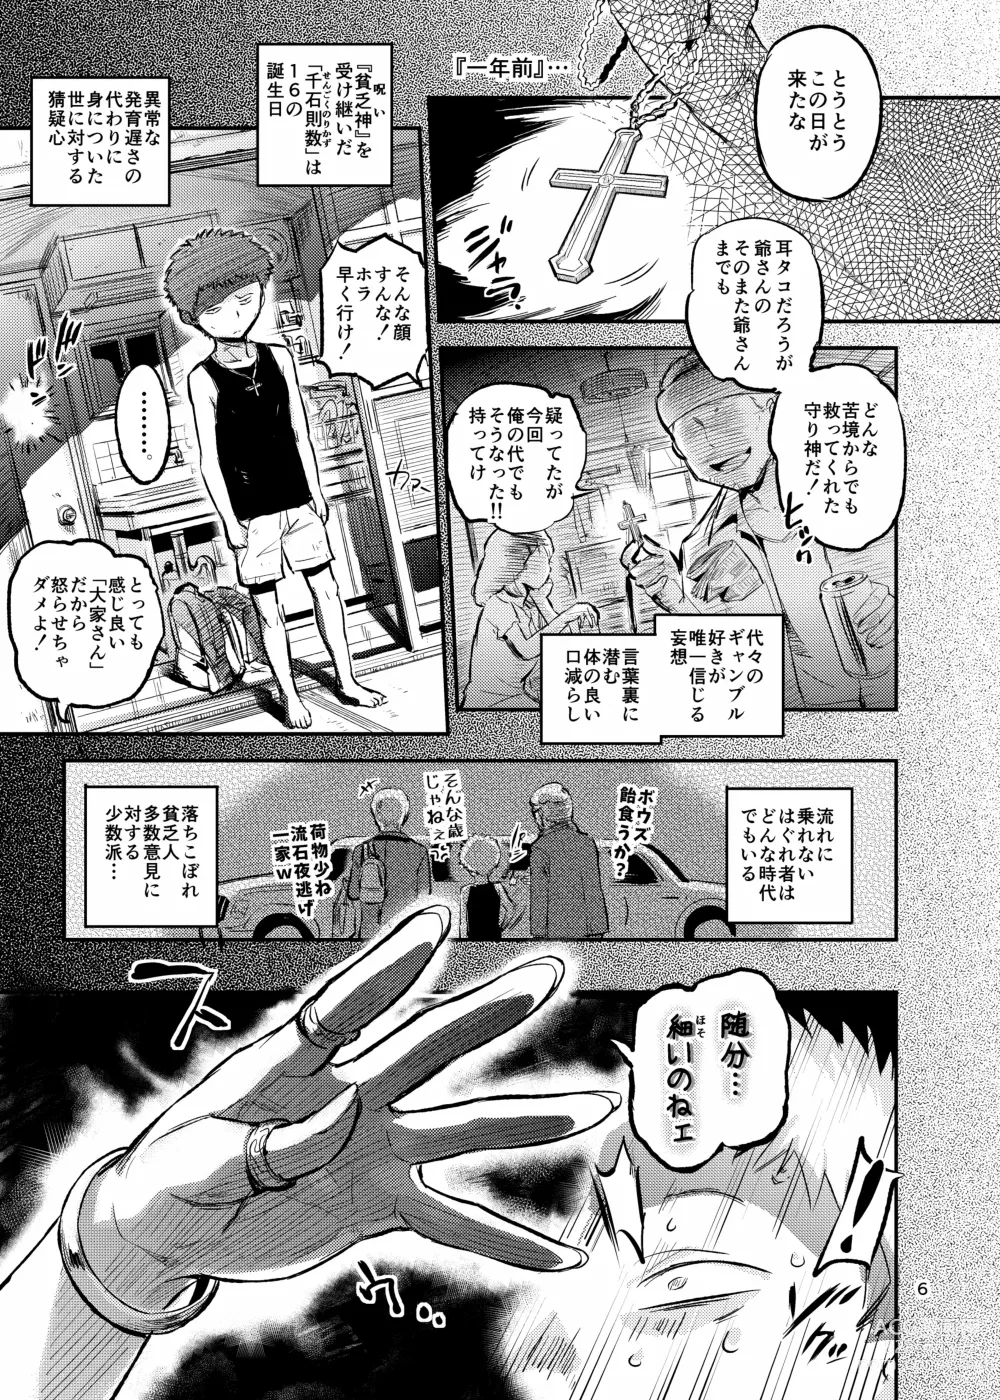 Page 6 of doujinshi 魔女は聖者を穴で汚す